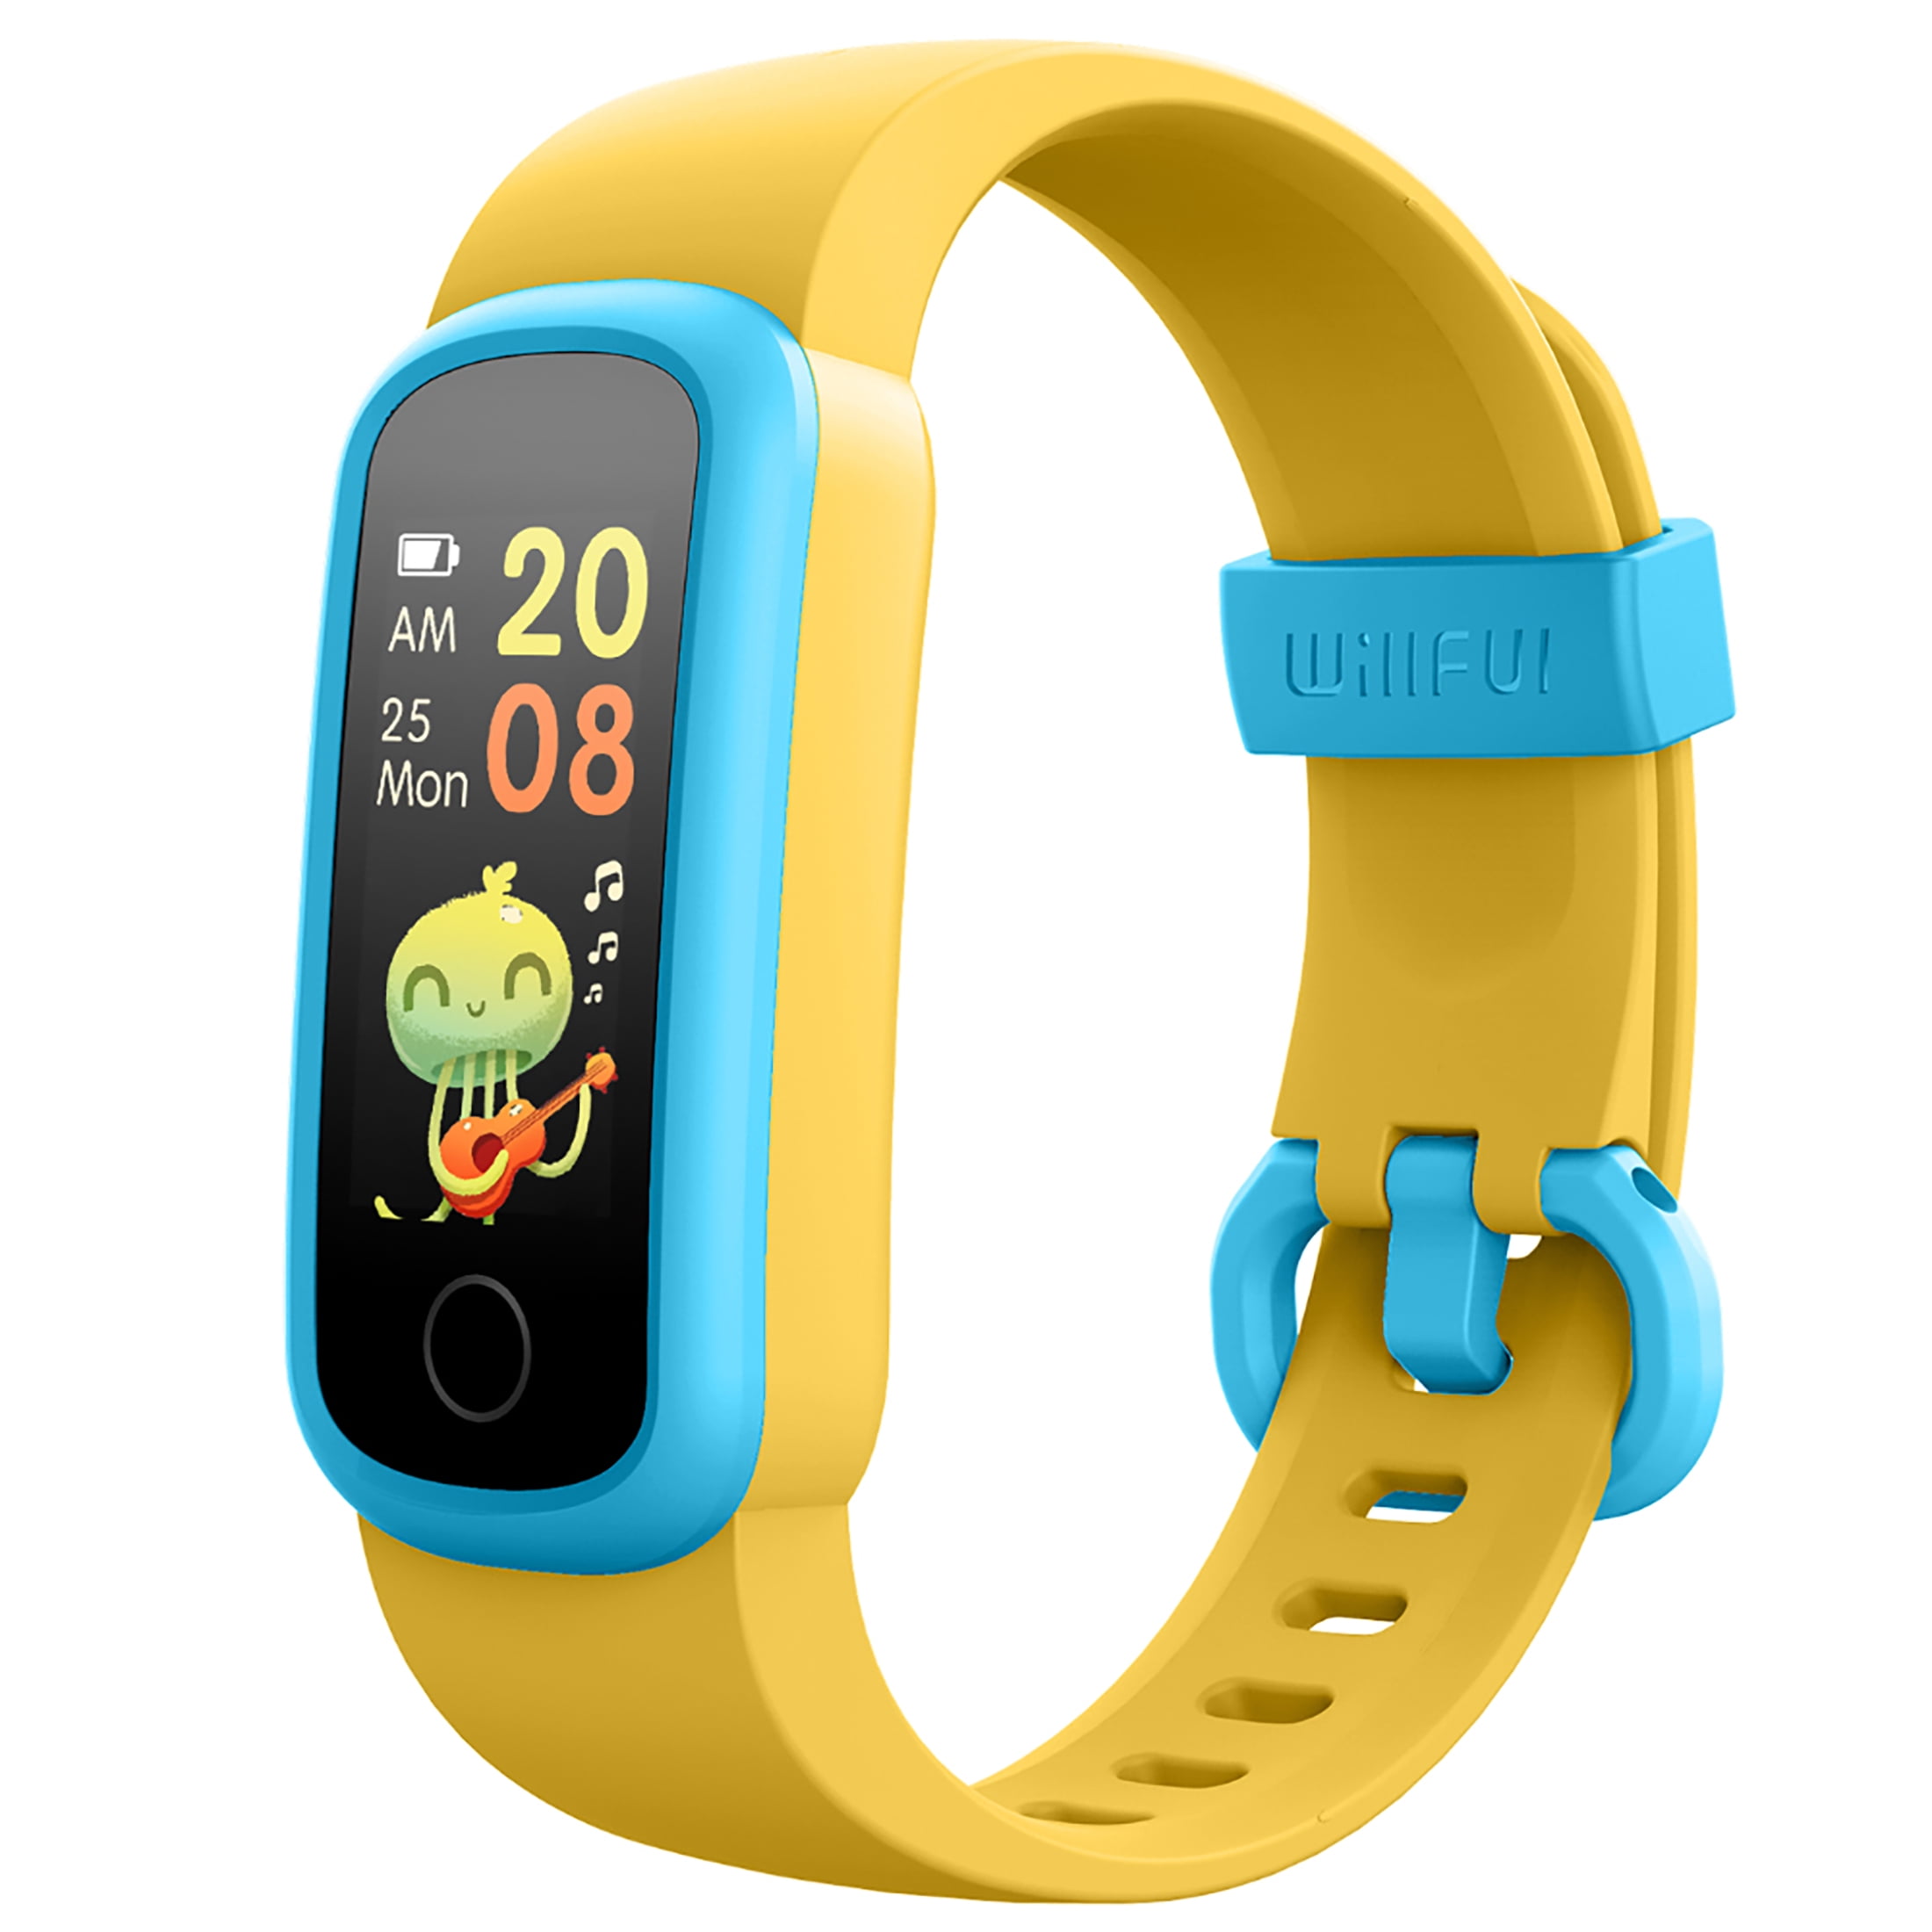 Non-Bluetooth Digital Fitness Tracker Watch Alarm Clock Walking Pedometer Watch Waterproof 3D Step Counter Great Gift for Kids Chlidren Boys Girls Teens Women Stopwatch 